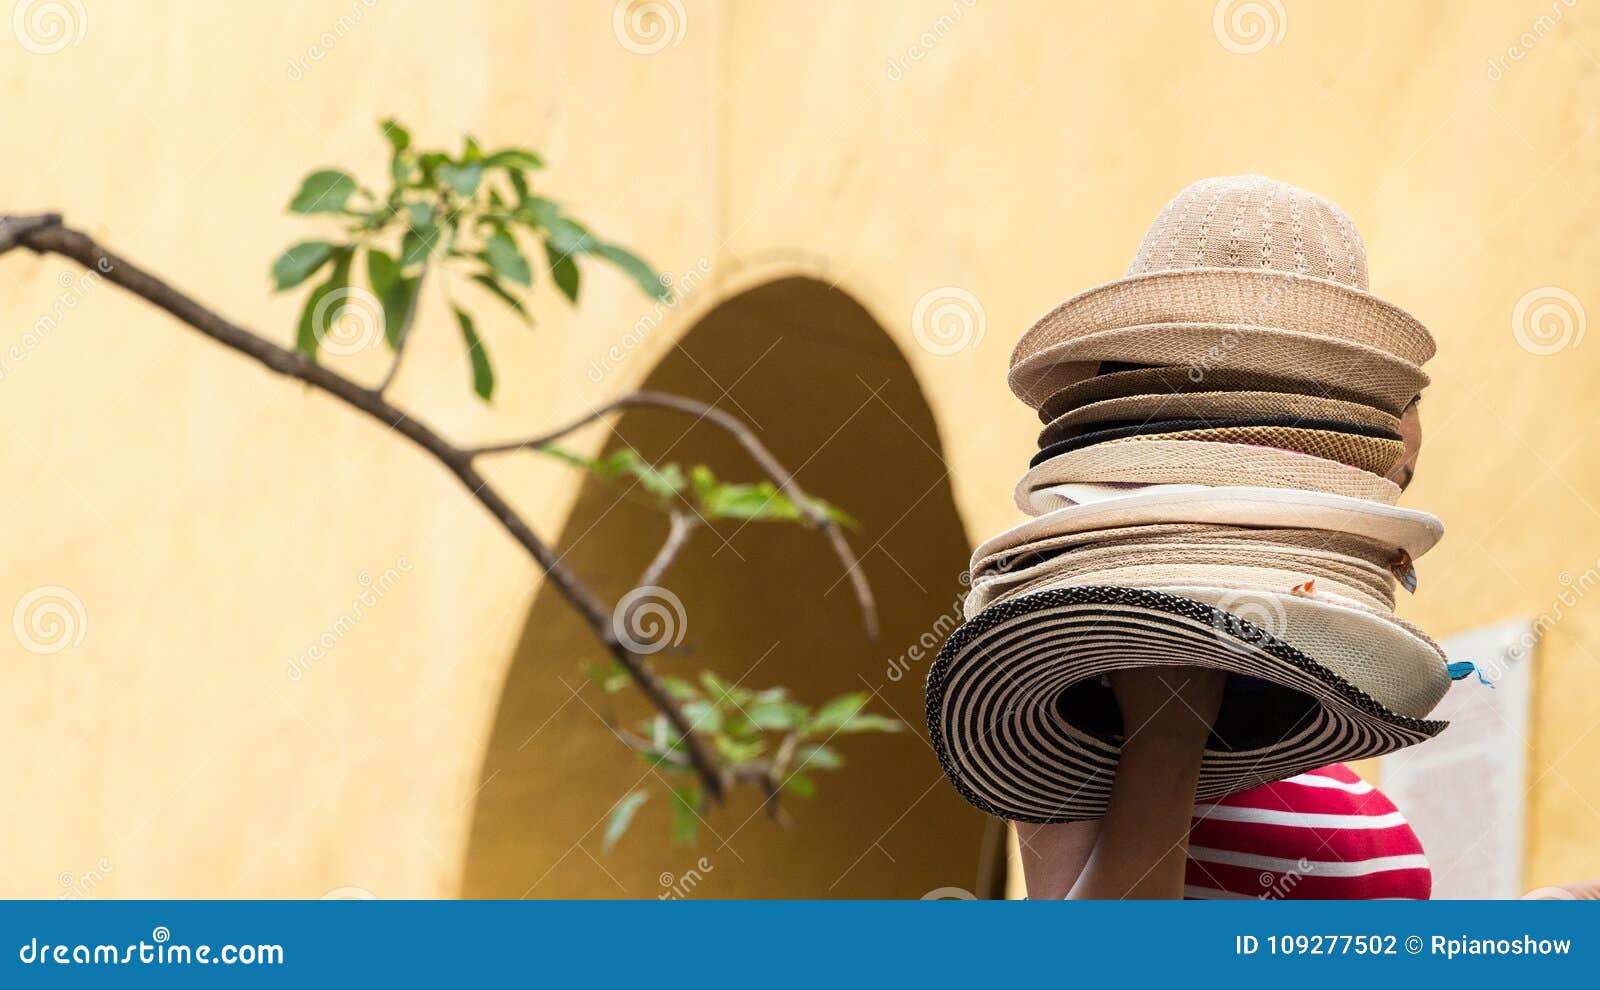 a female hats street vendor in cartagena.